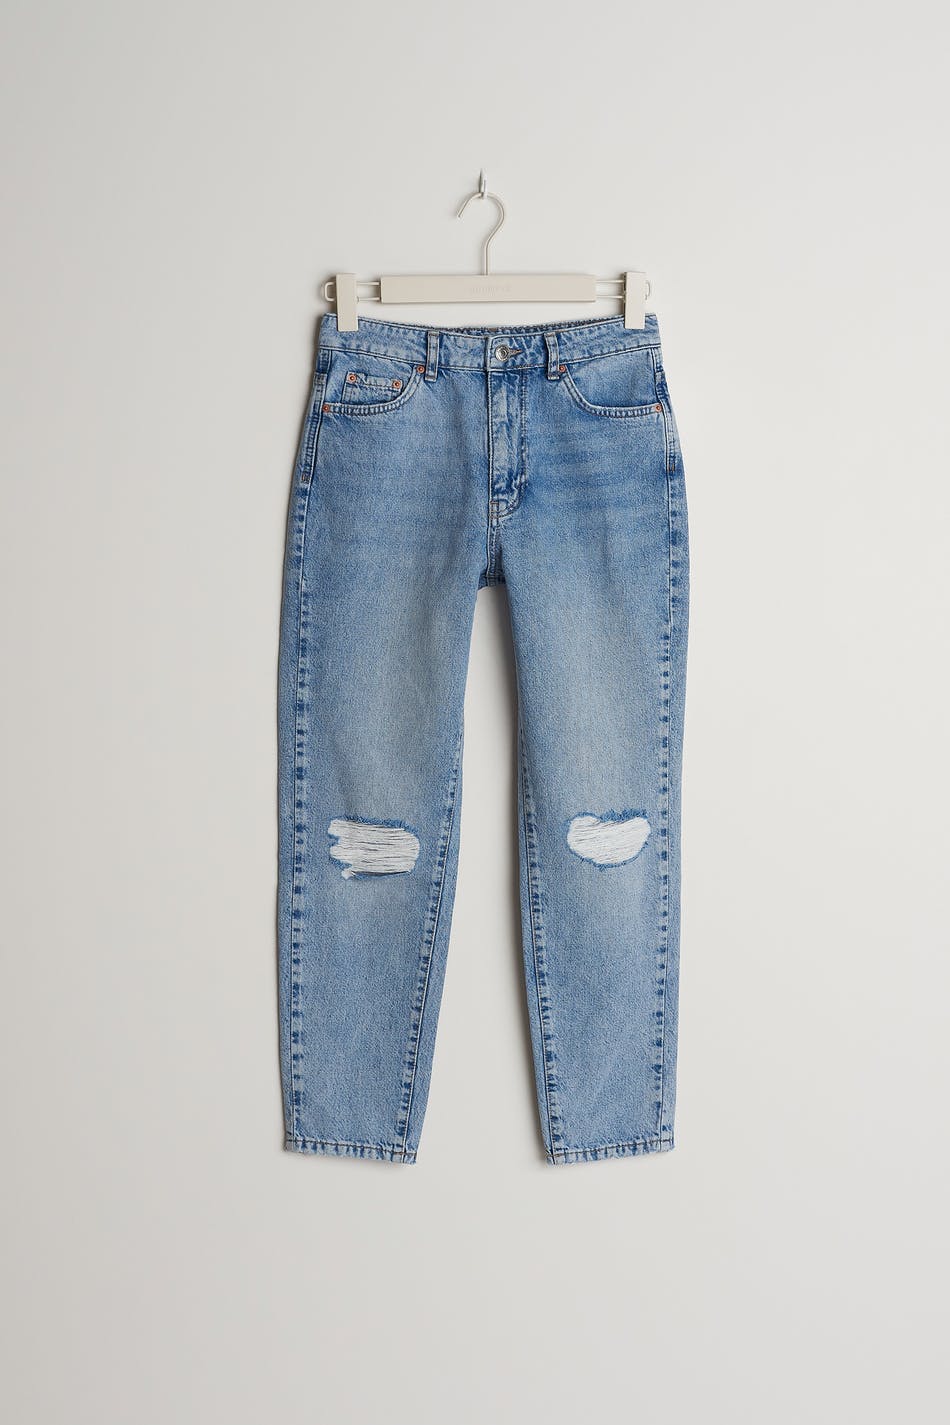 Gina Tricot Dagny PETITE jeans 44  Sea blue dest (5114)